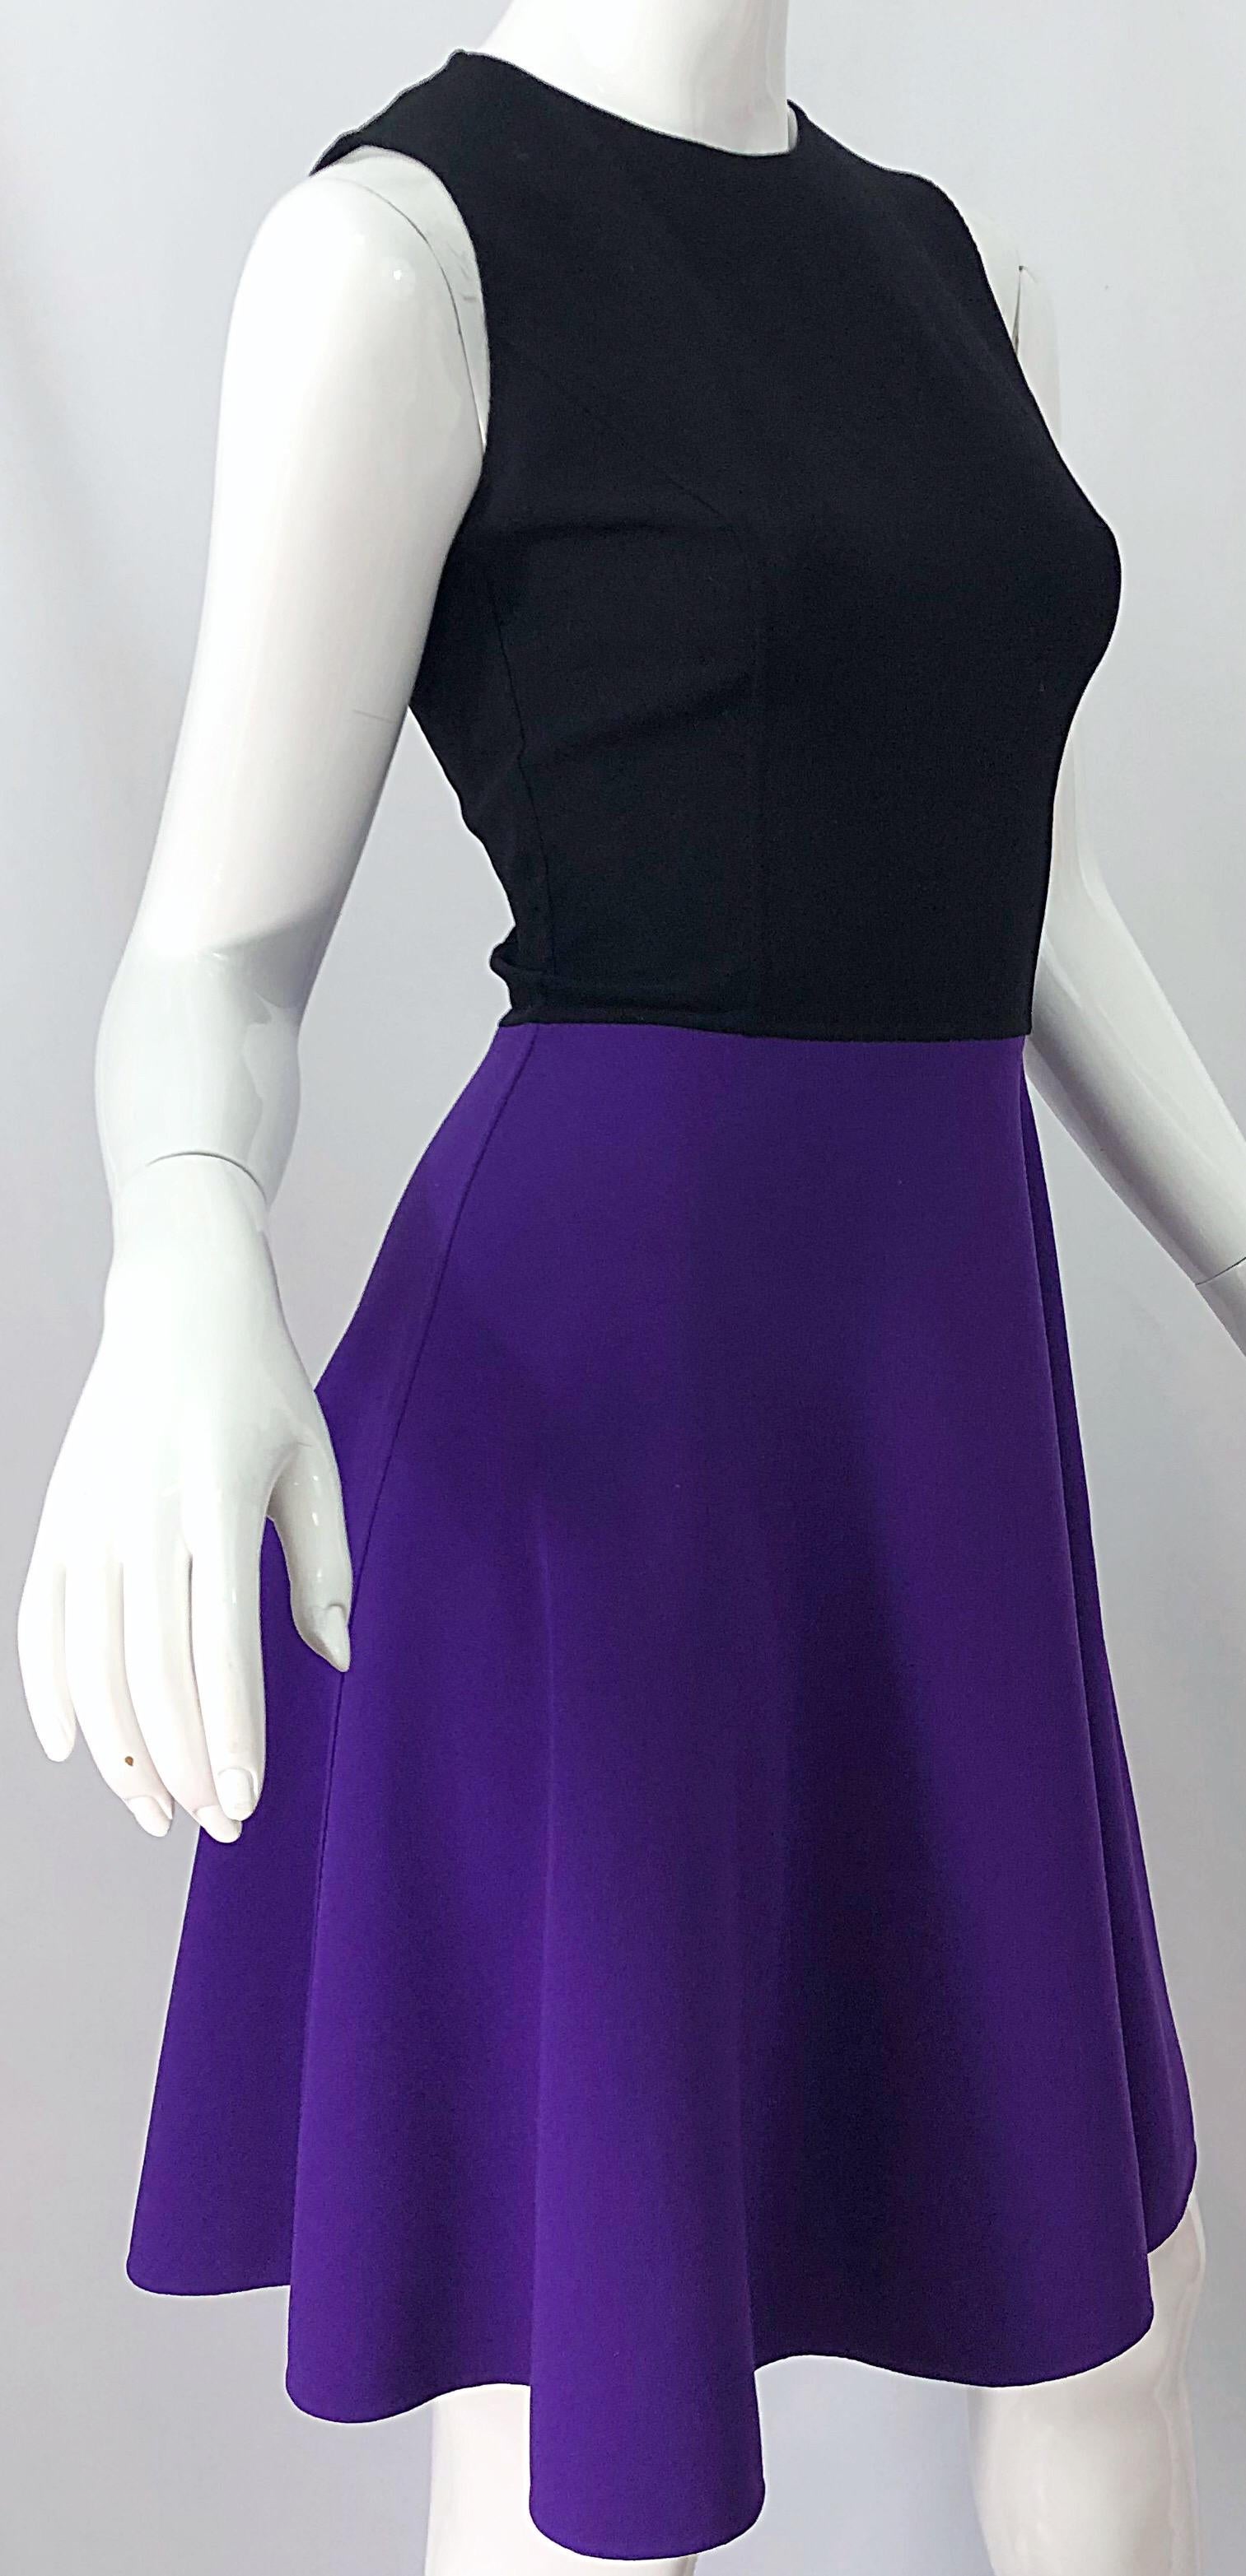 Michael Kors Collection Size 2 / 4 Purple + Black Color Block Sleeveles Dress For Sale 1